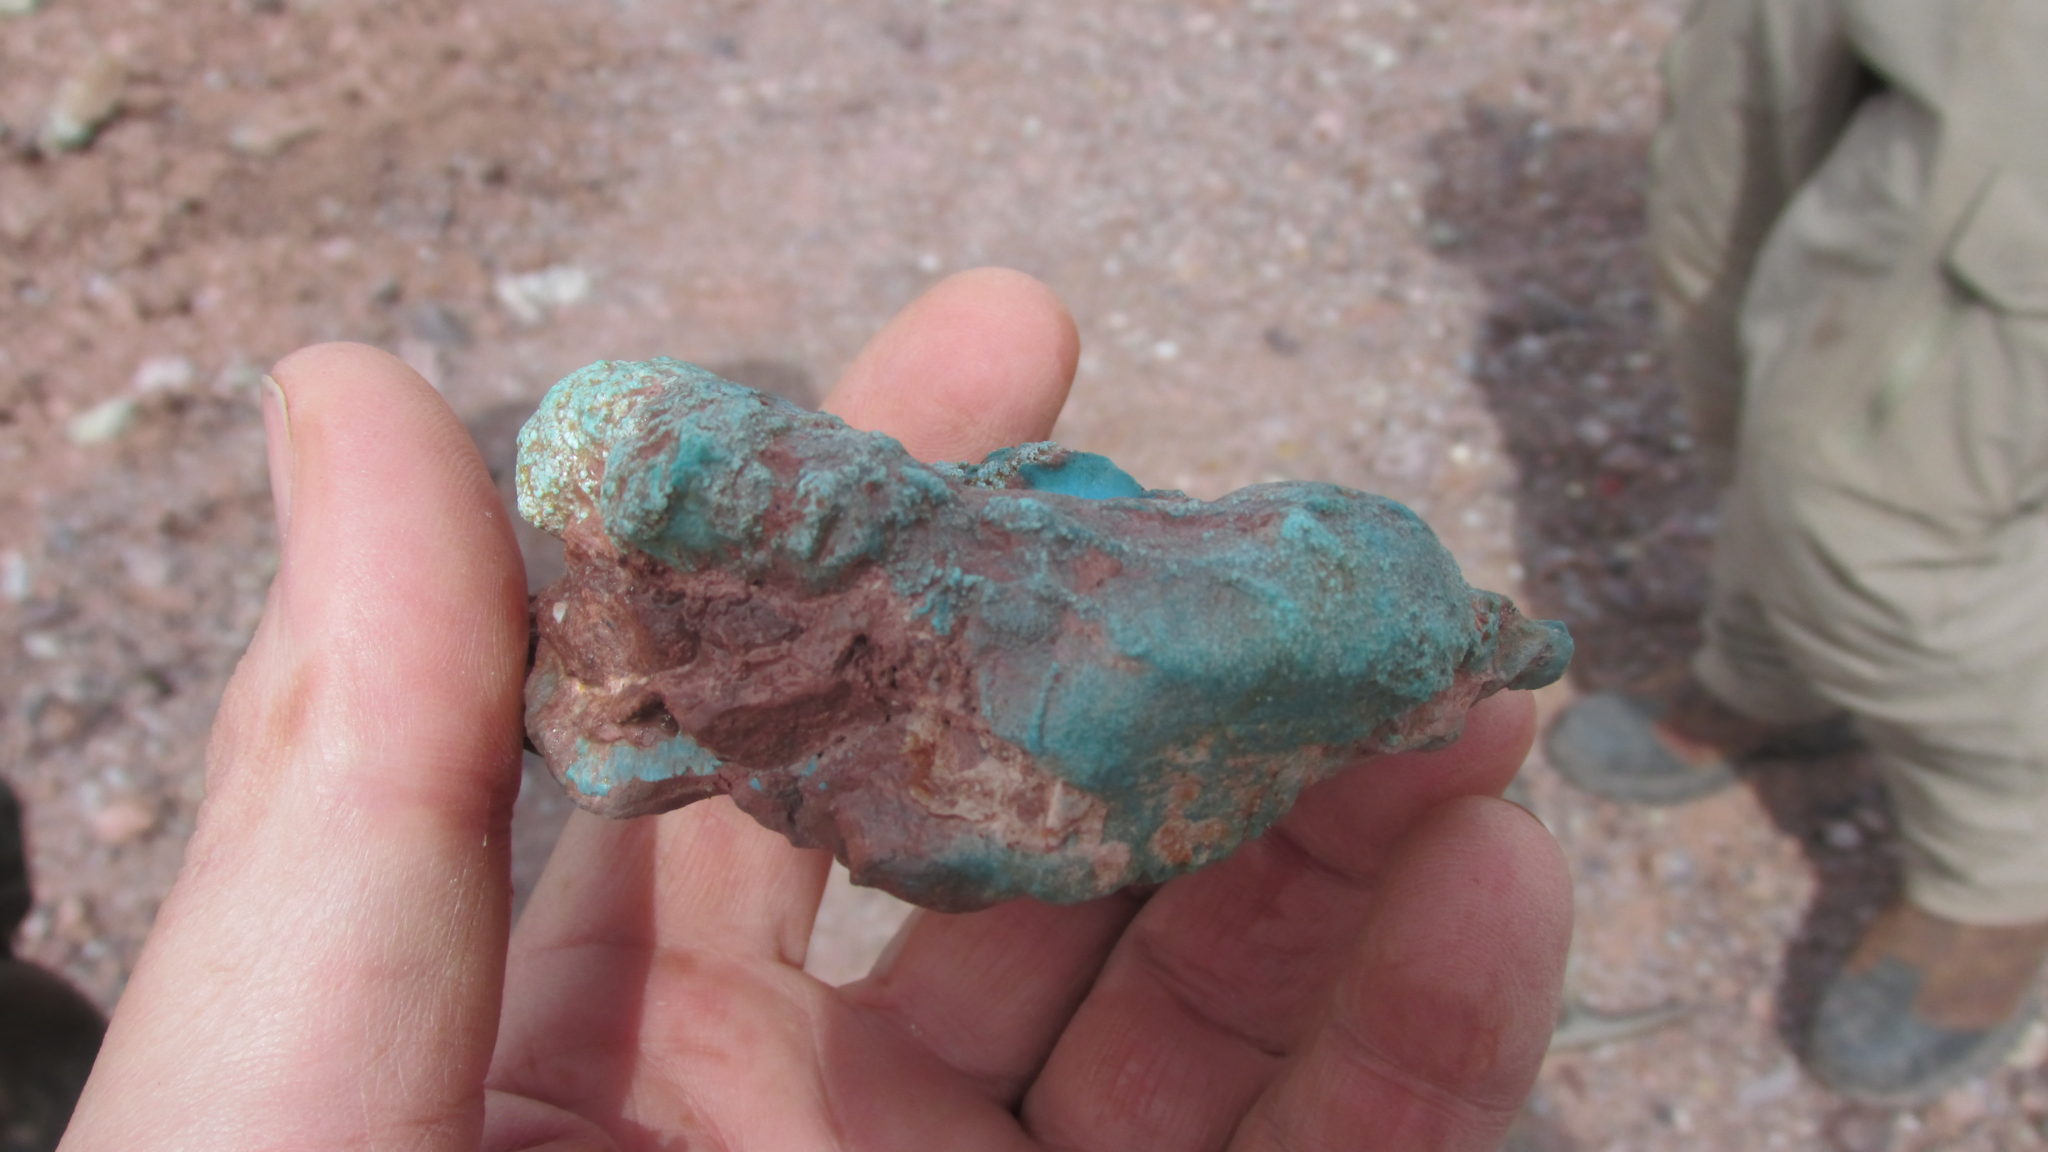 Bisbee Turquoise Specimen Found April 28, 2017